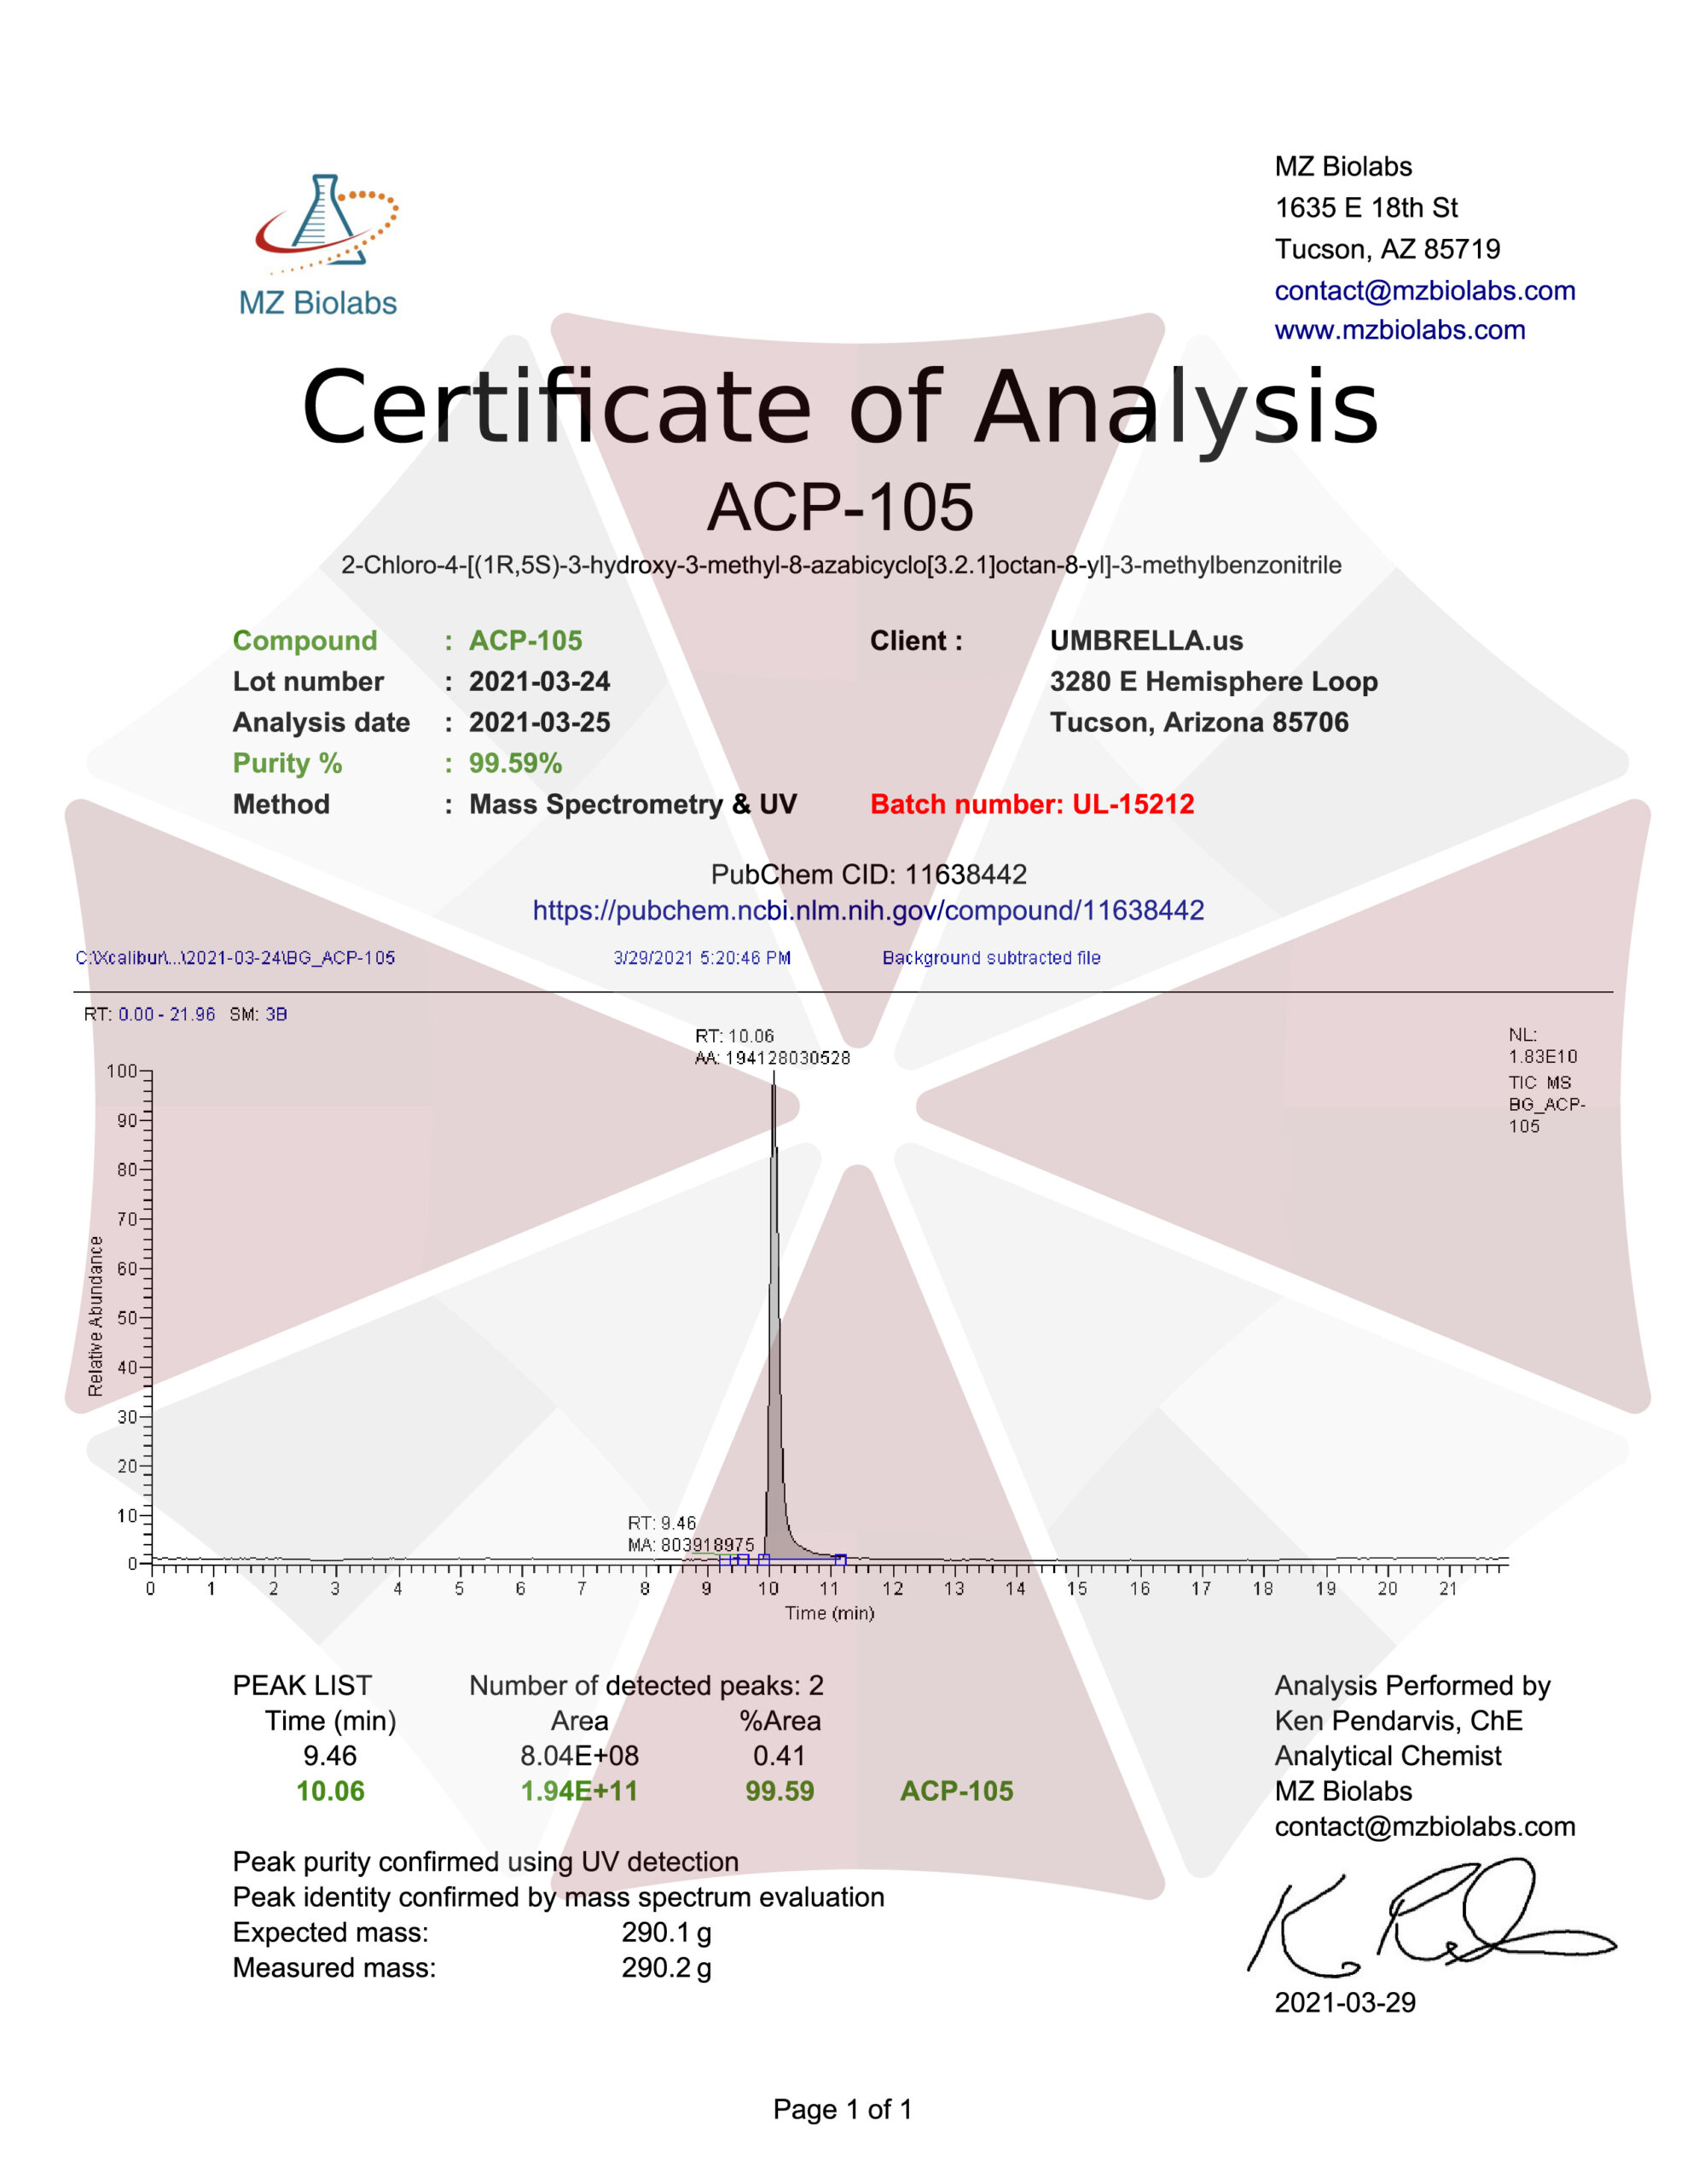 ACP-105 Certification of Authenticity COA